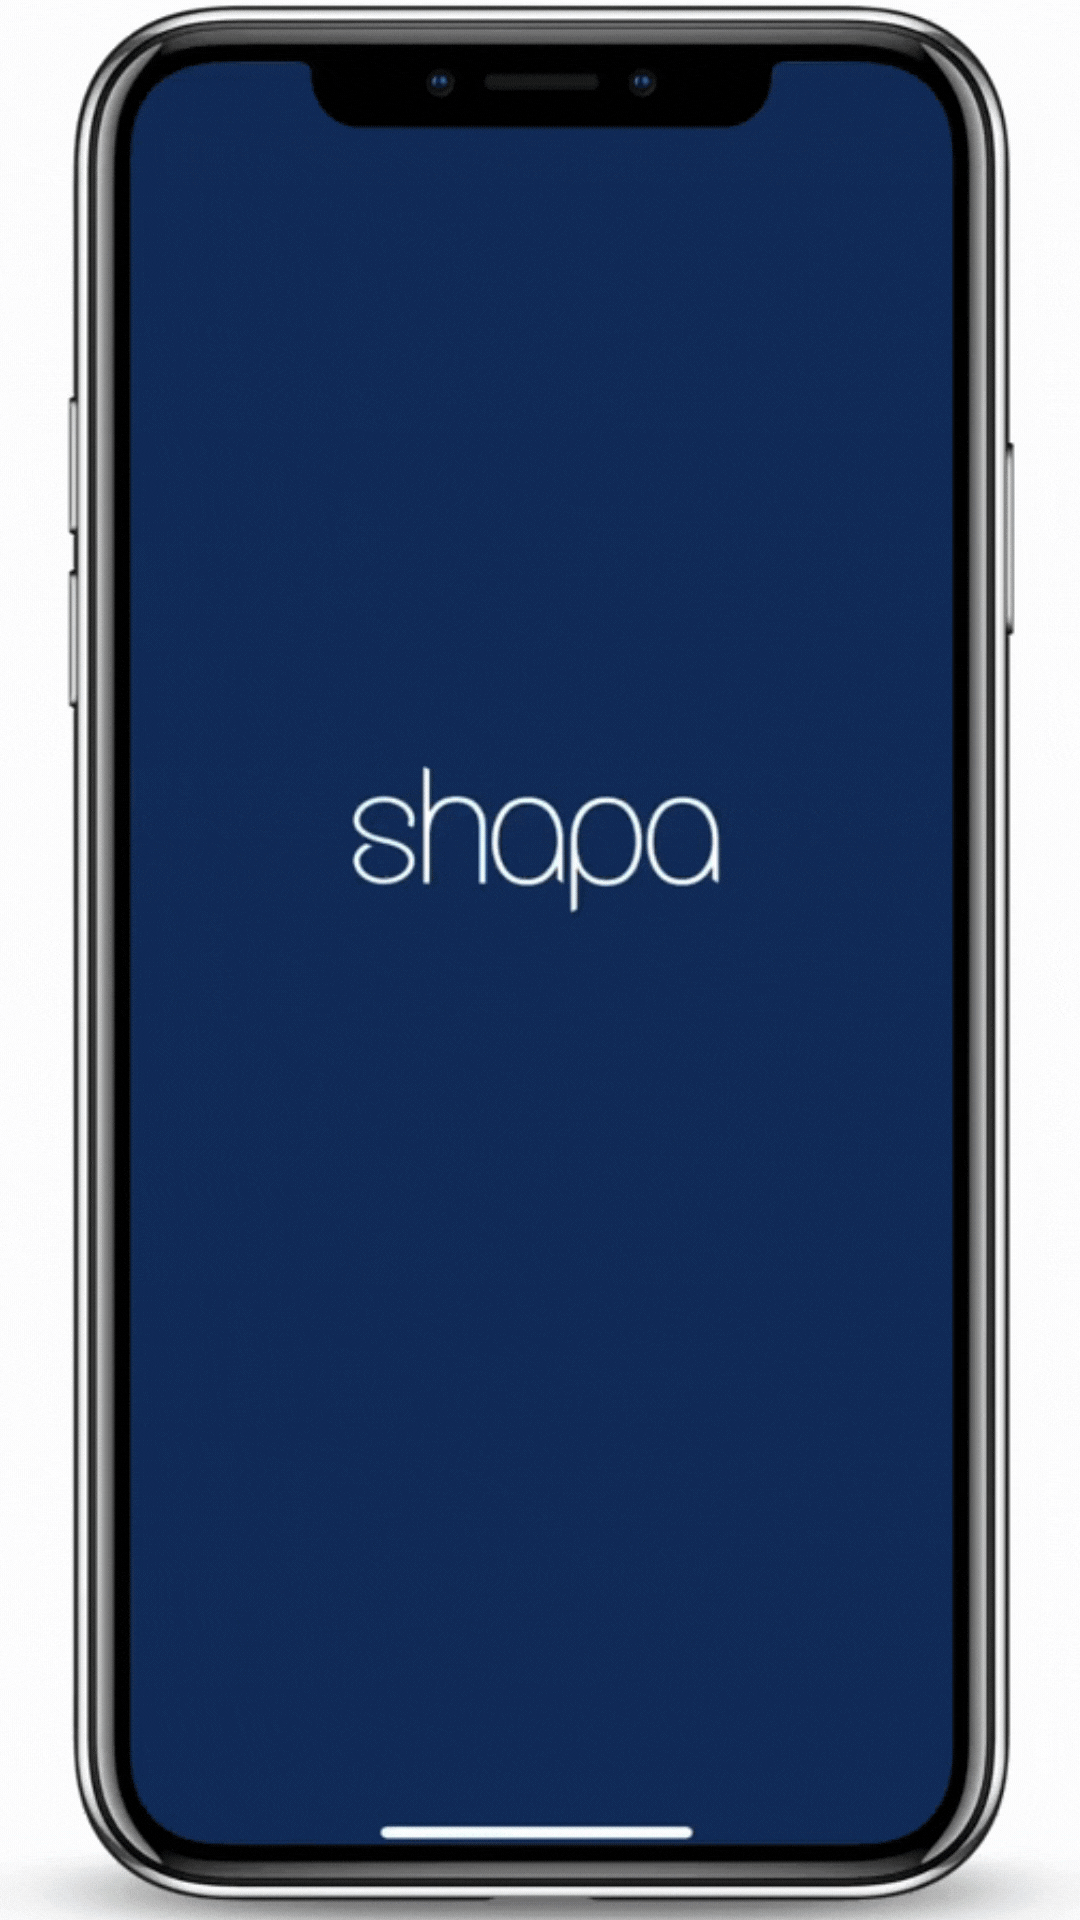 Shapa by Shapa Inc.